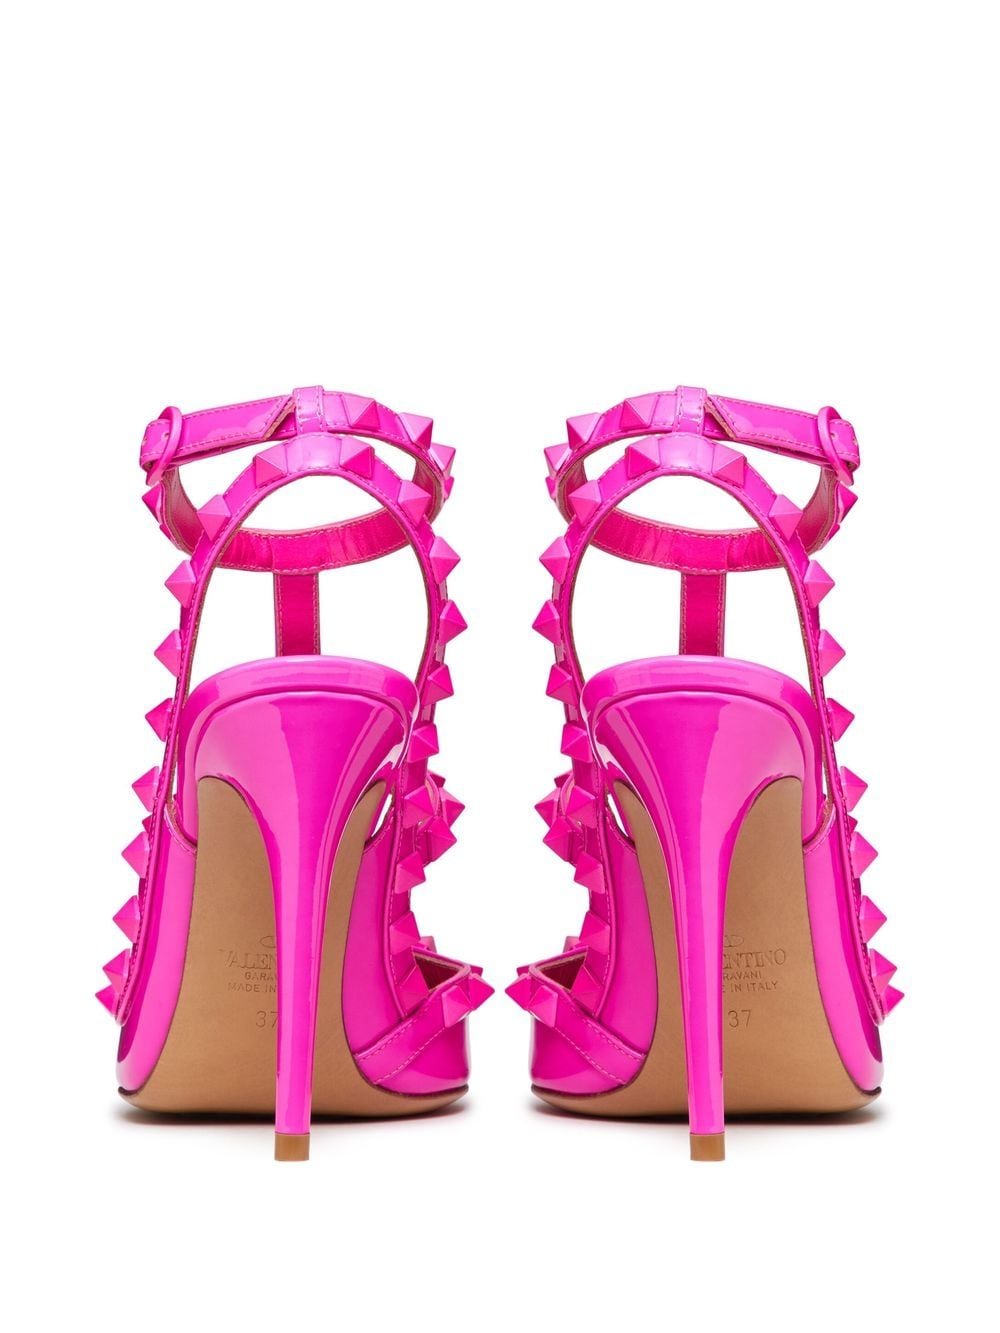 Fuchsia Pink Rockstud Ankle-Strap Pumps for Women by Valentino Garavani